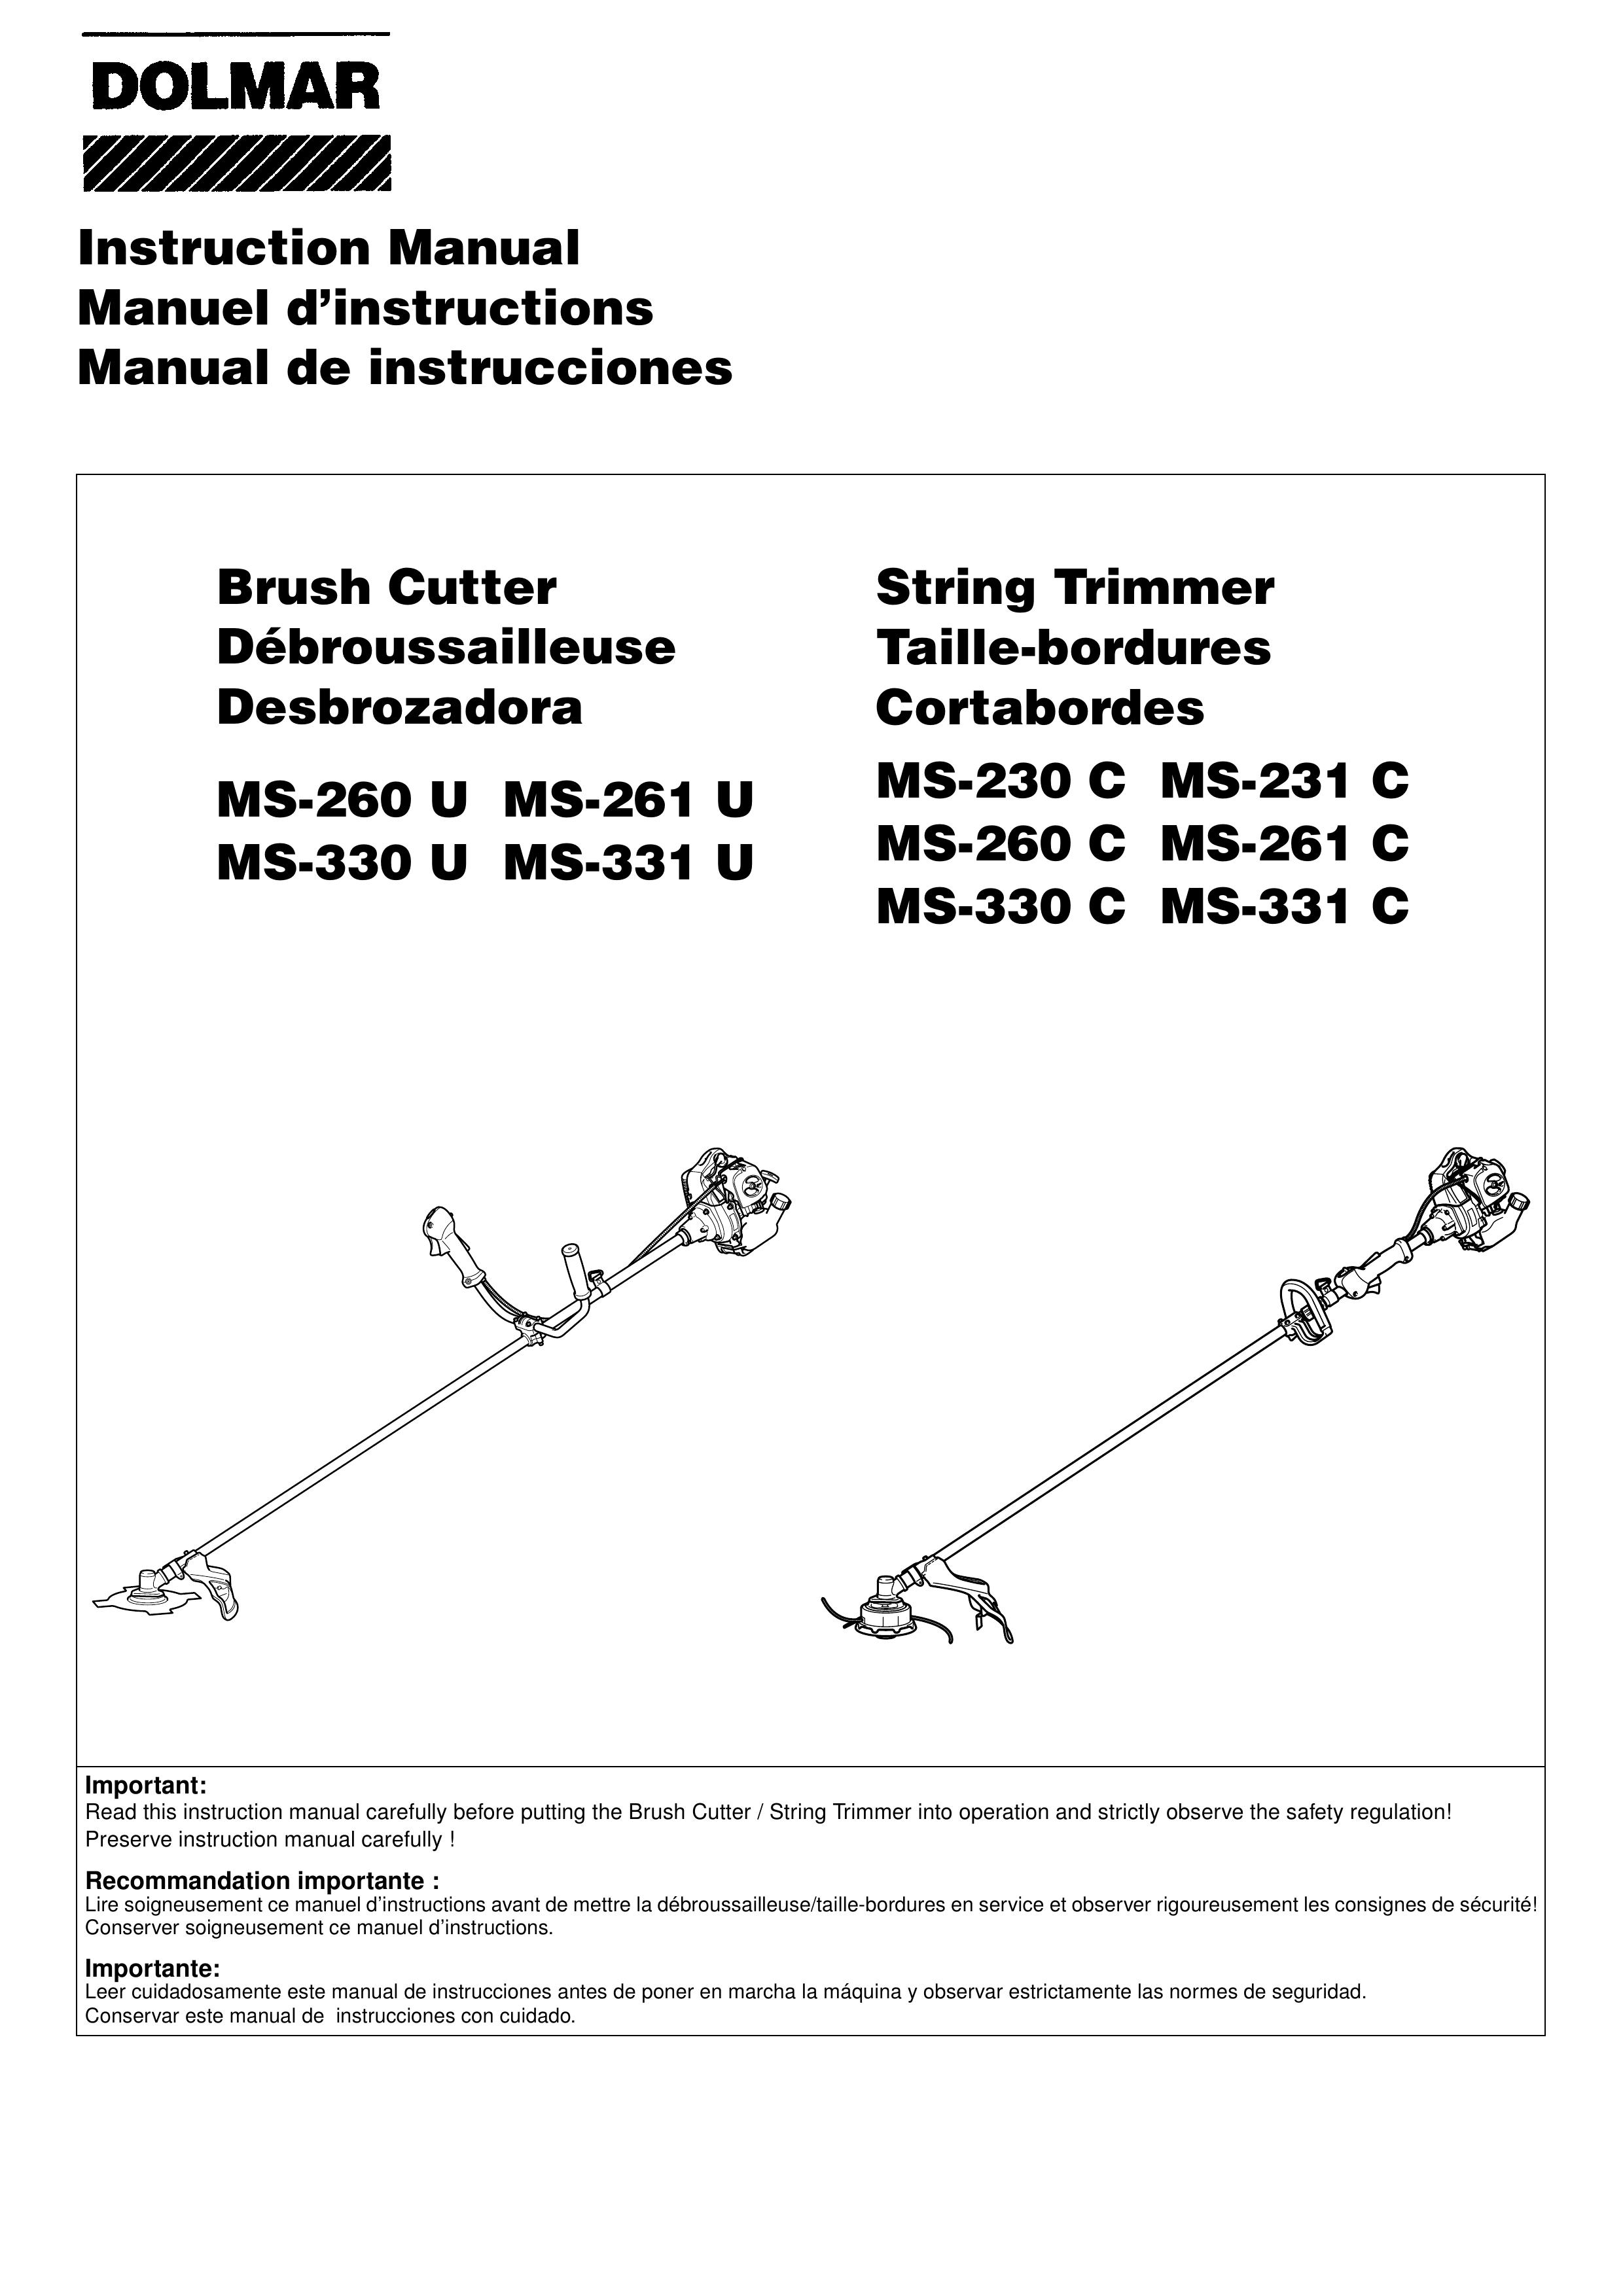 Dolmar MS-261 C Brush Cutter User Manual